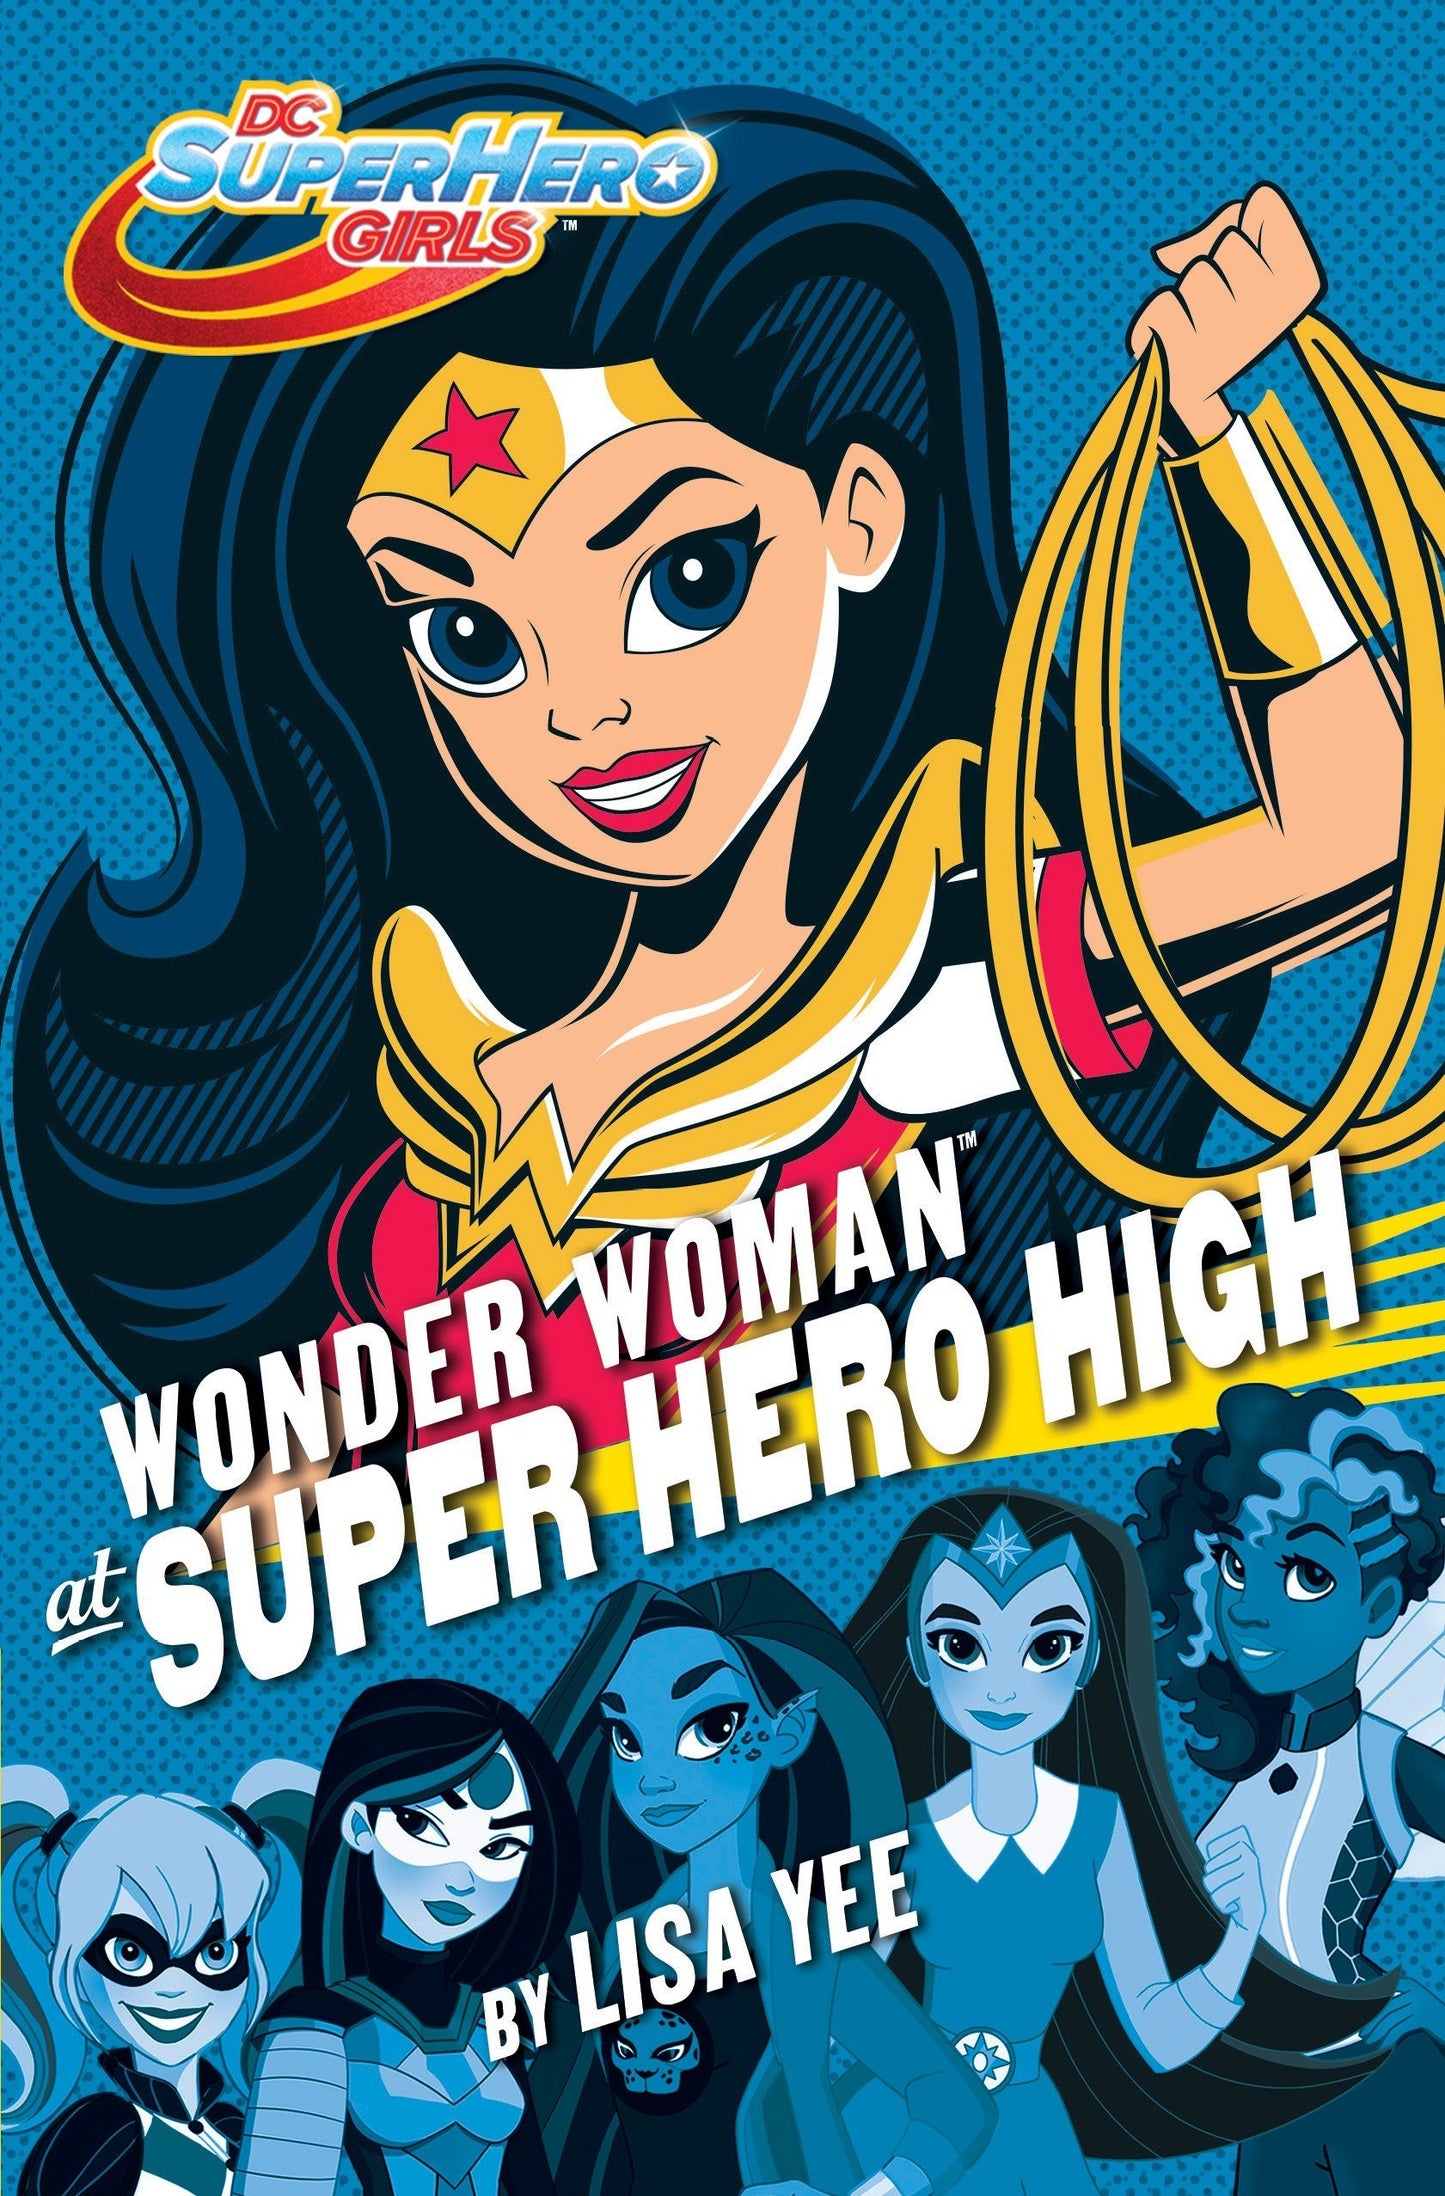 DC Super Hero Girls Wonder Woman at Super Hero High